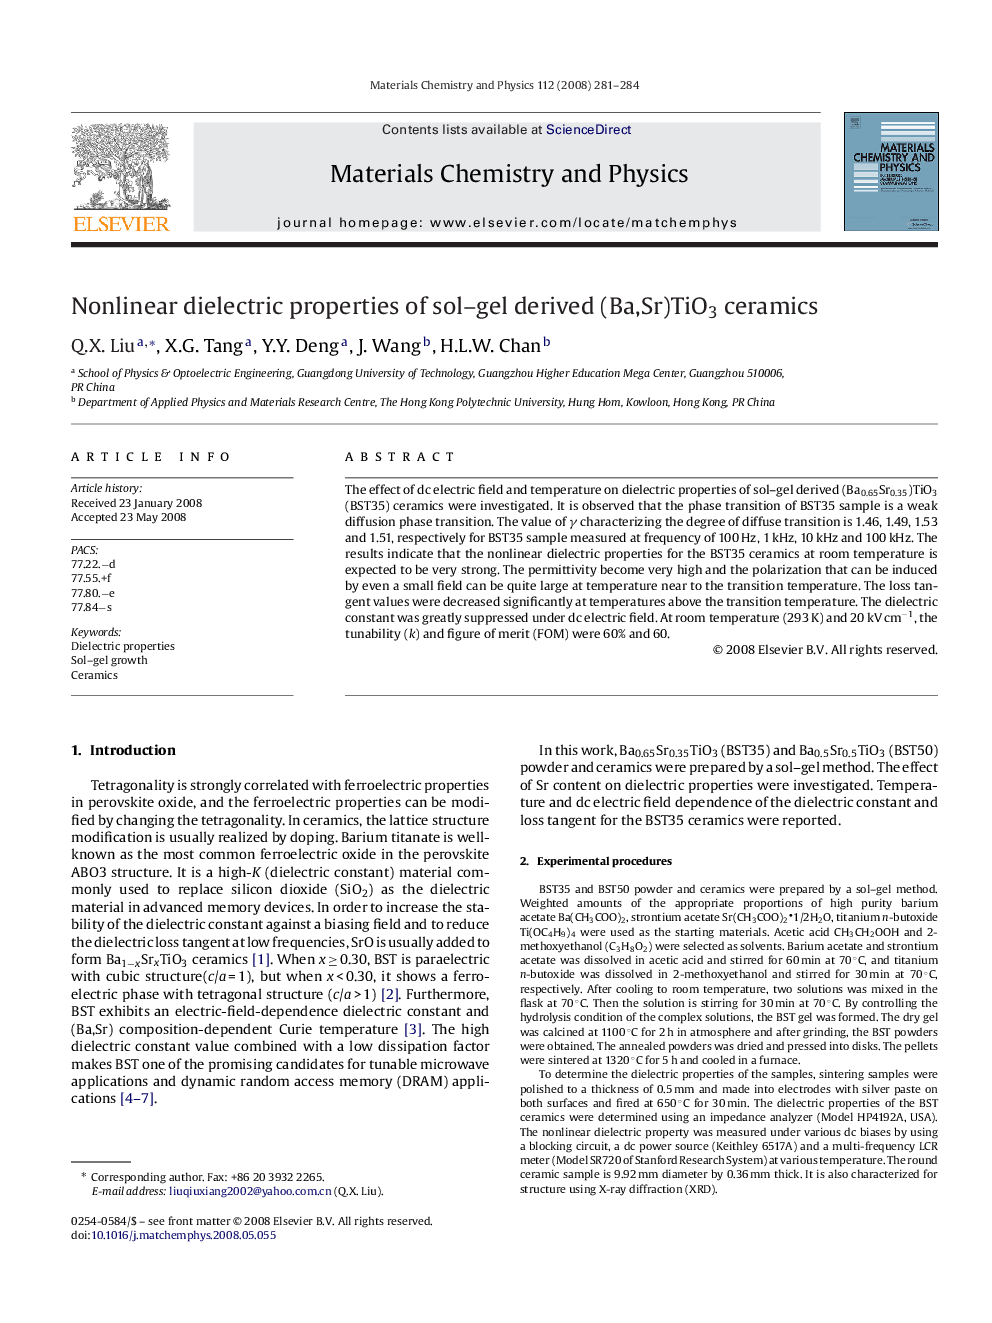 Nonlinear dielectric properties of sol-gel derived (Ba,Sr)TiO3 ceramics